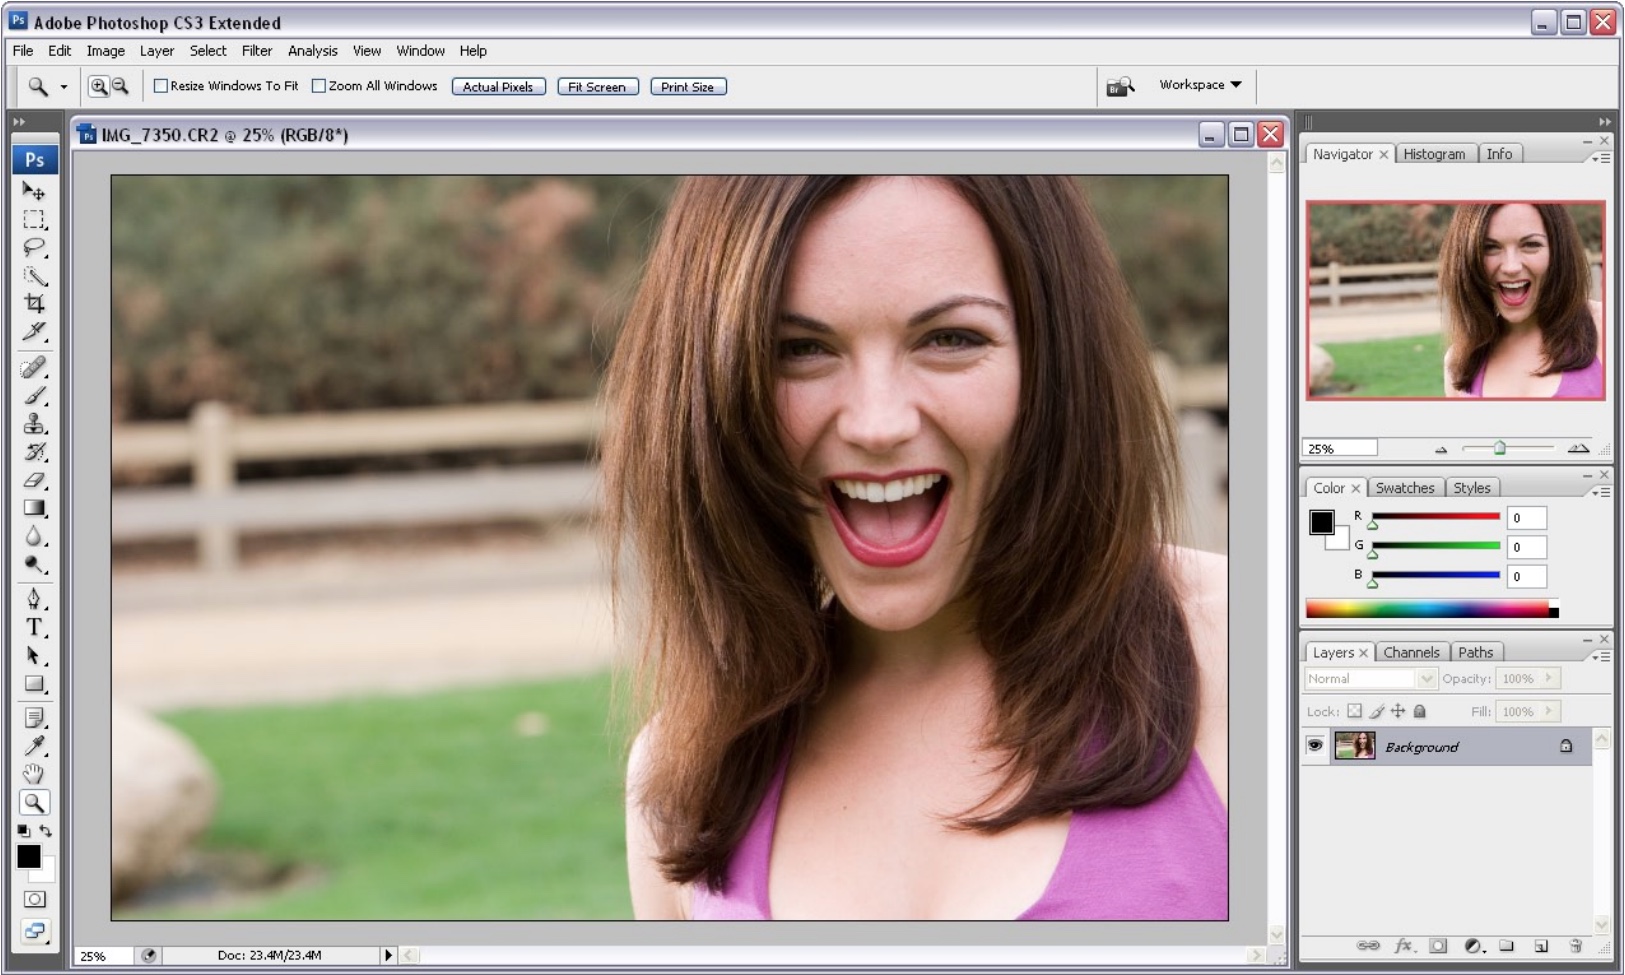 Adobe Photoshop CS3 for Windows Workspace (2007)